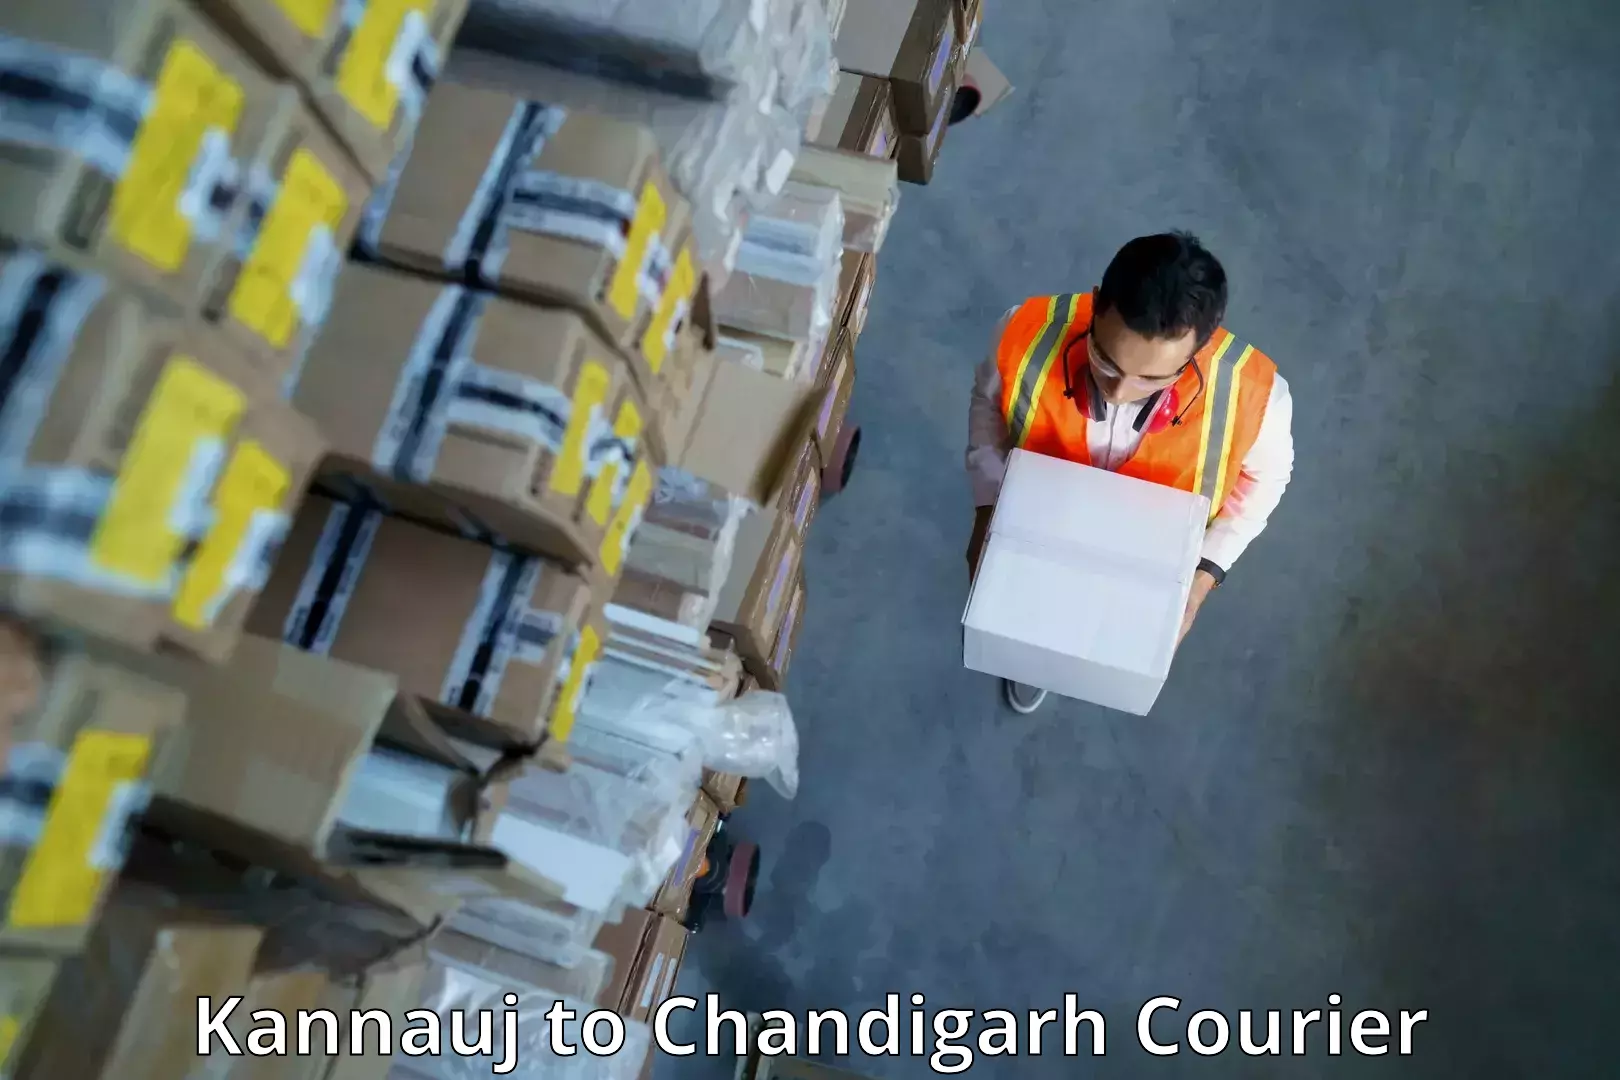 Logistics service provider Kannauj to Chandigarh